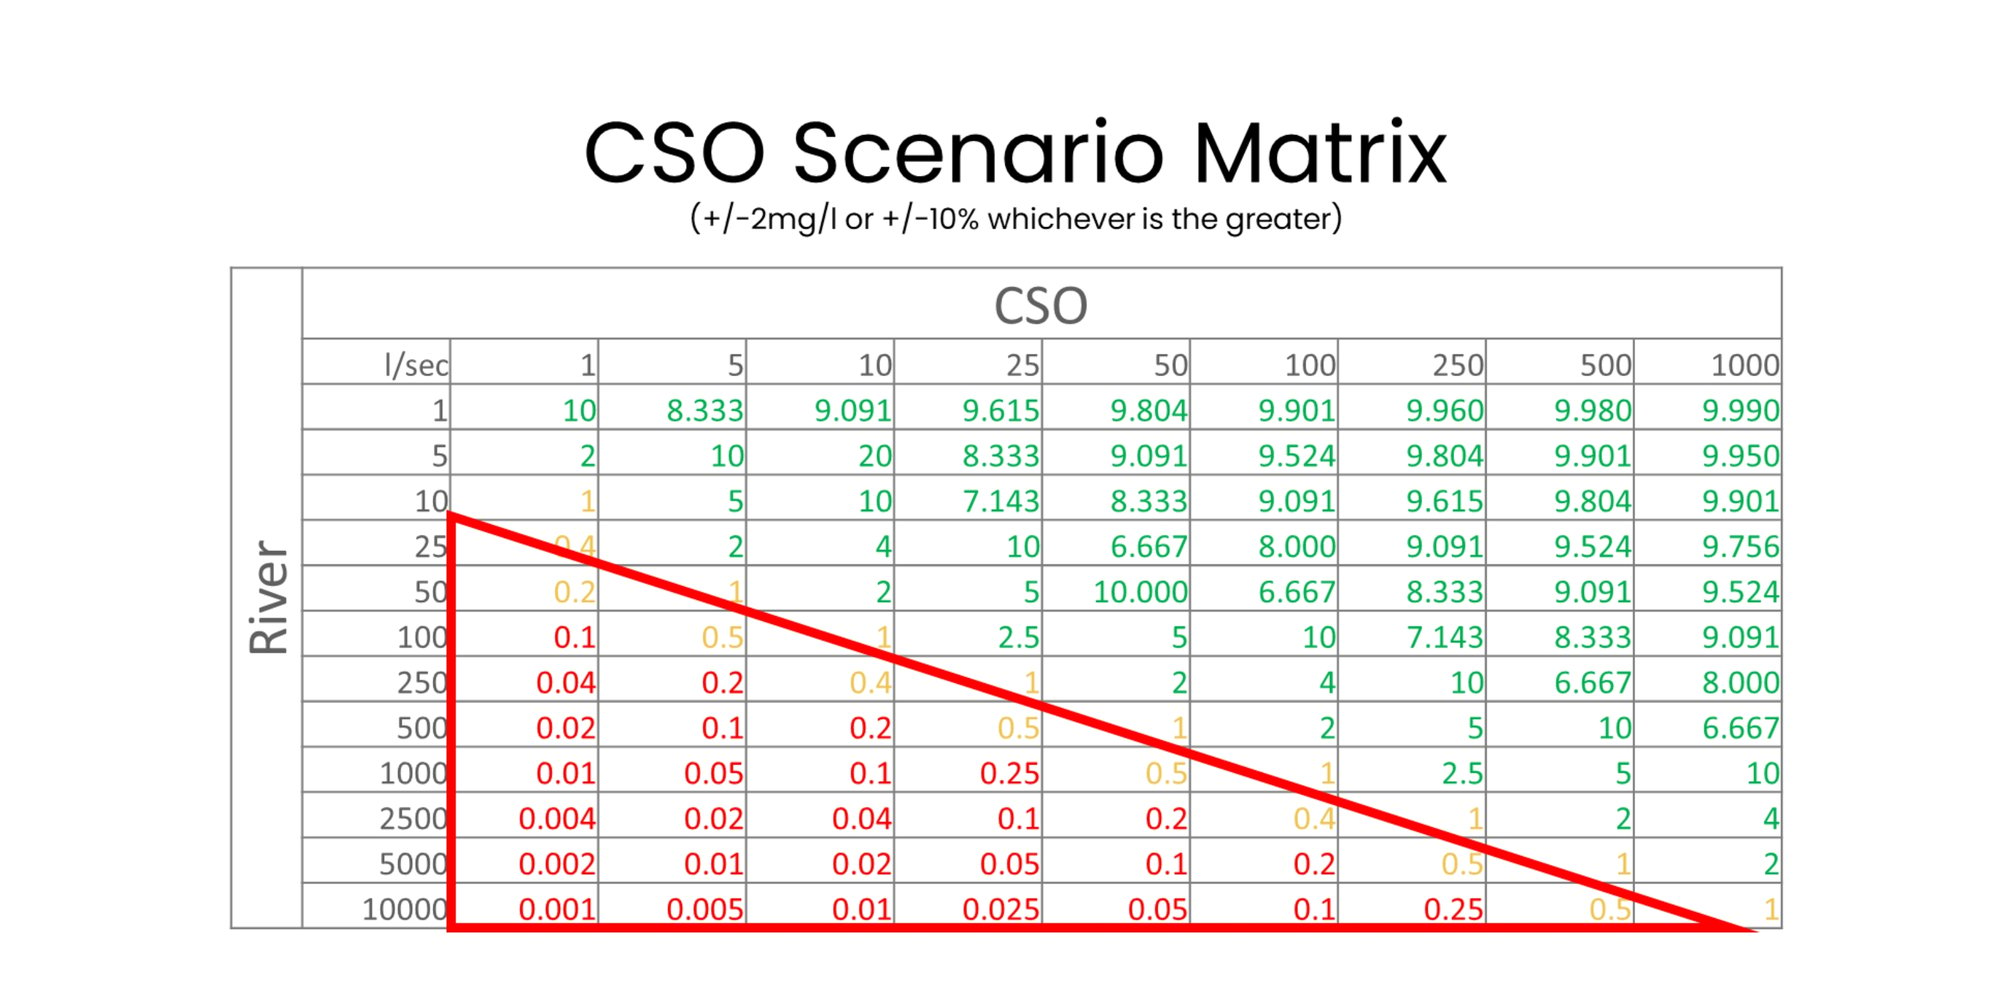 Table 2 Typical Calibration Calendar for a Multiparameter Sonde